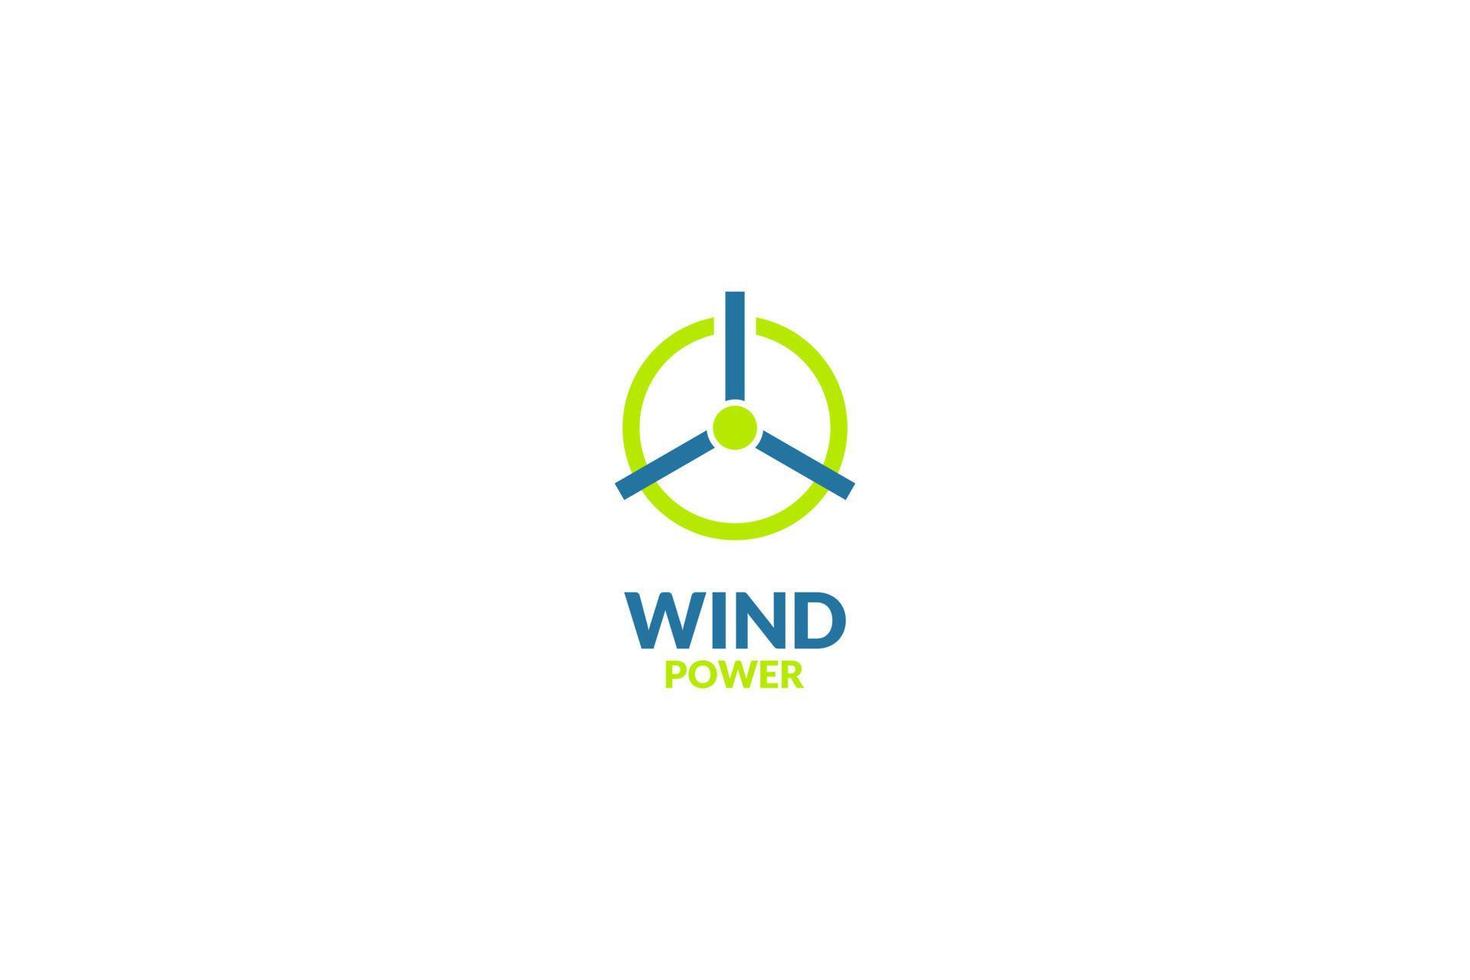 Wind power logo design vector illustration idea